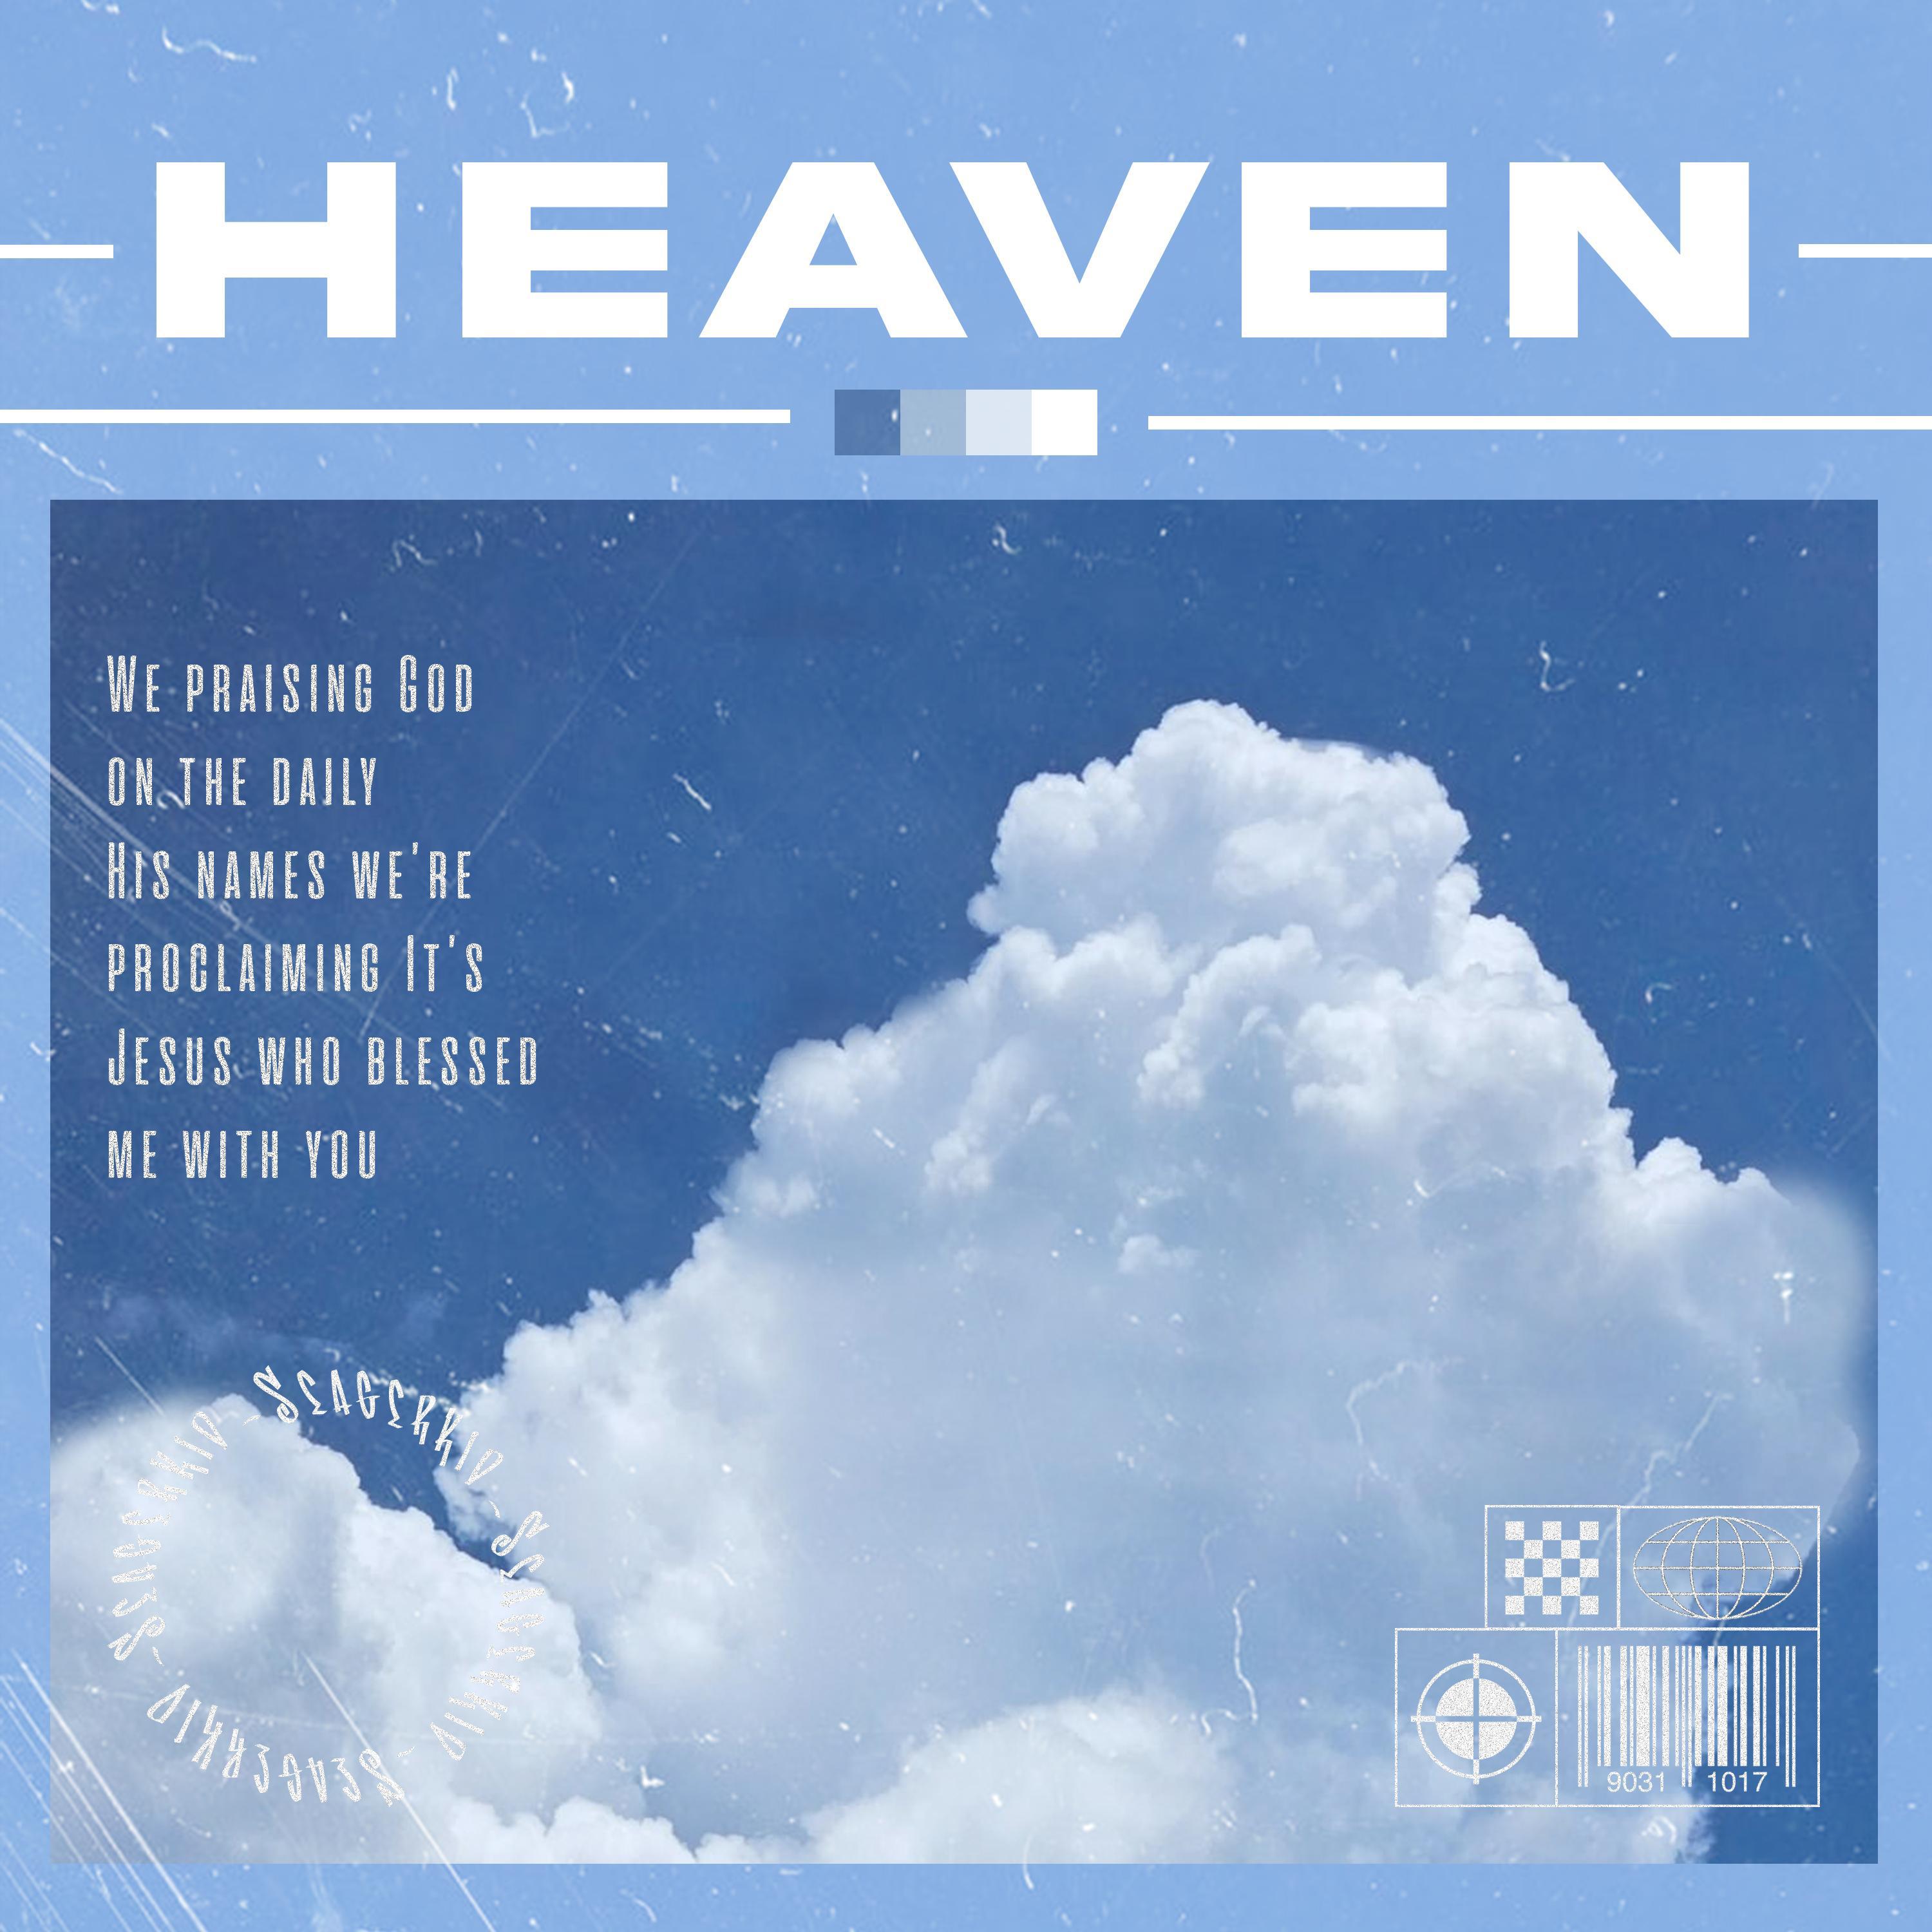 Seagerkid - Heaven (feat. Ultralight)